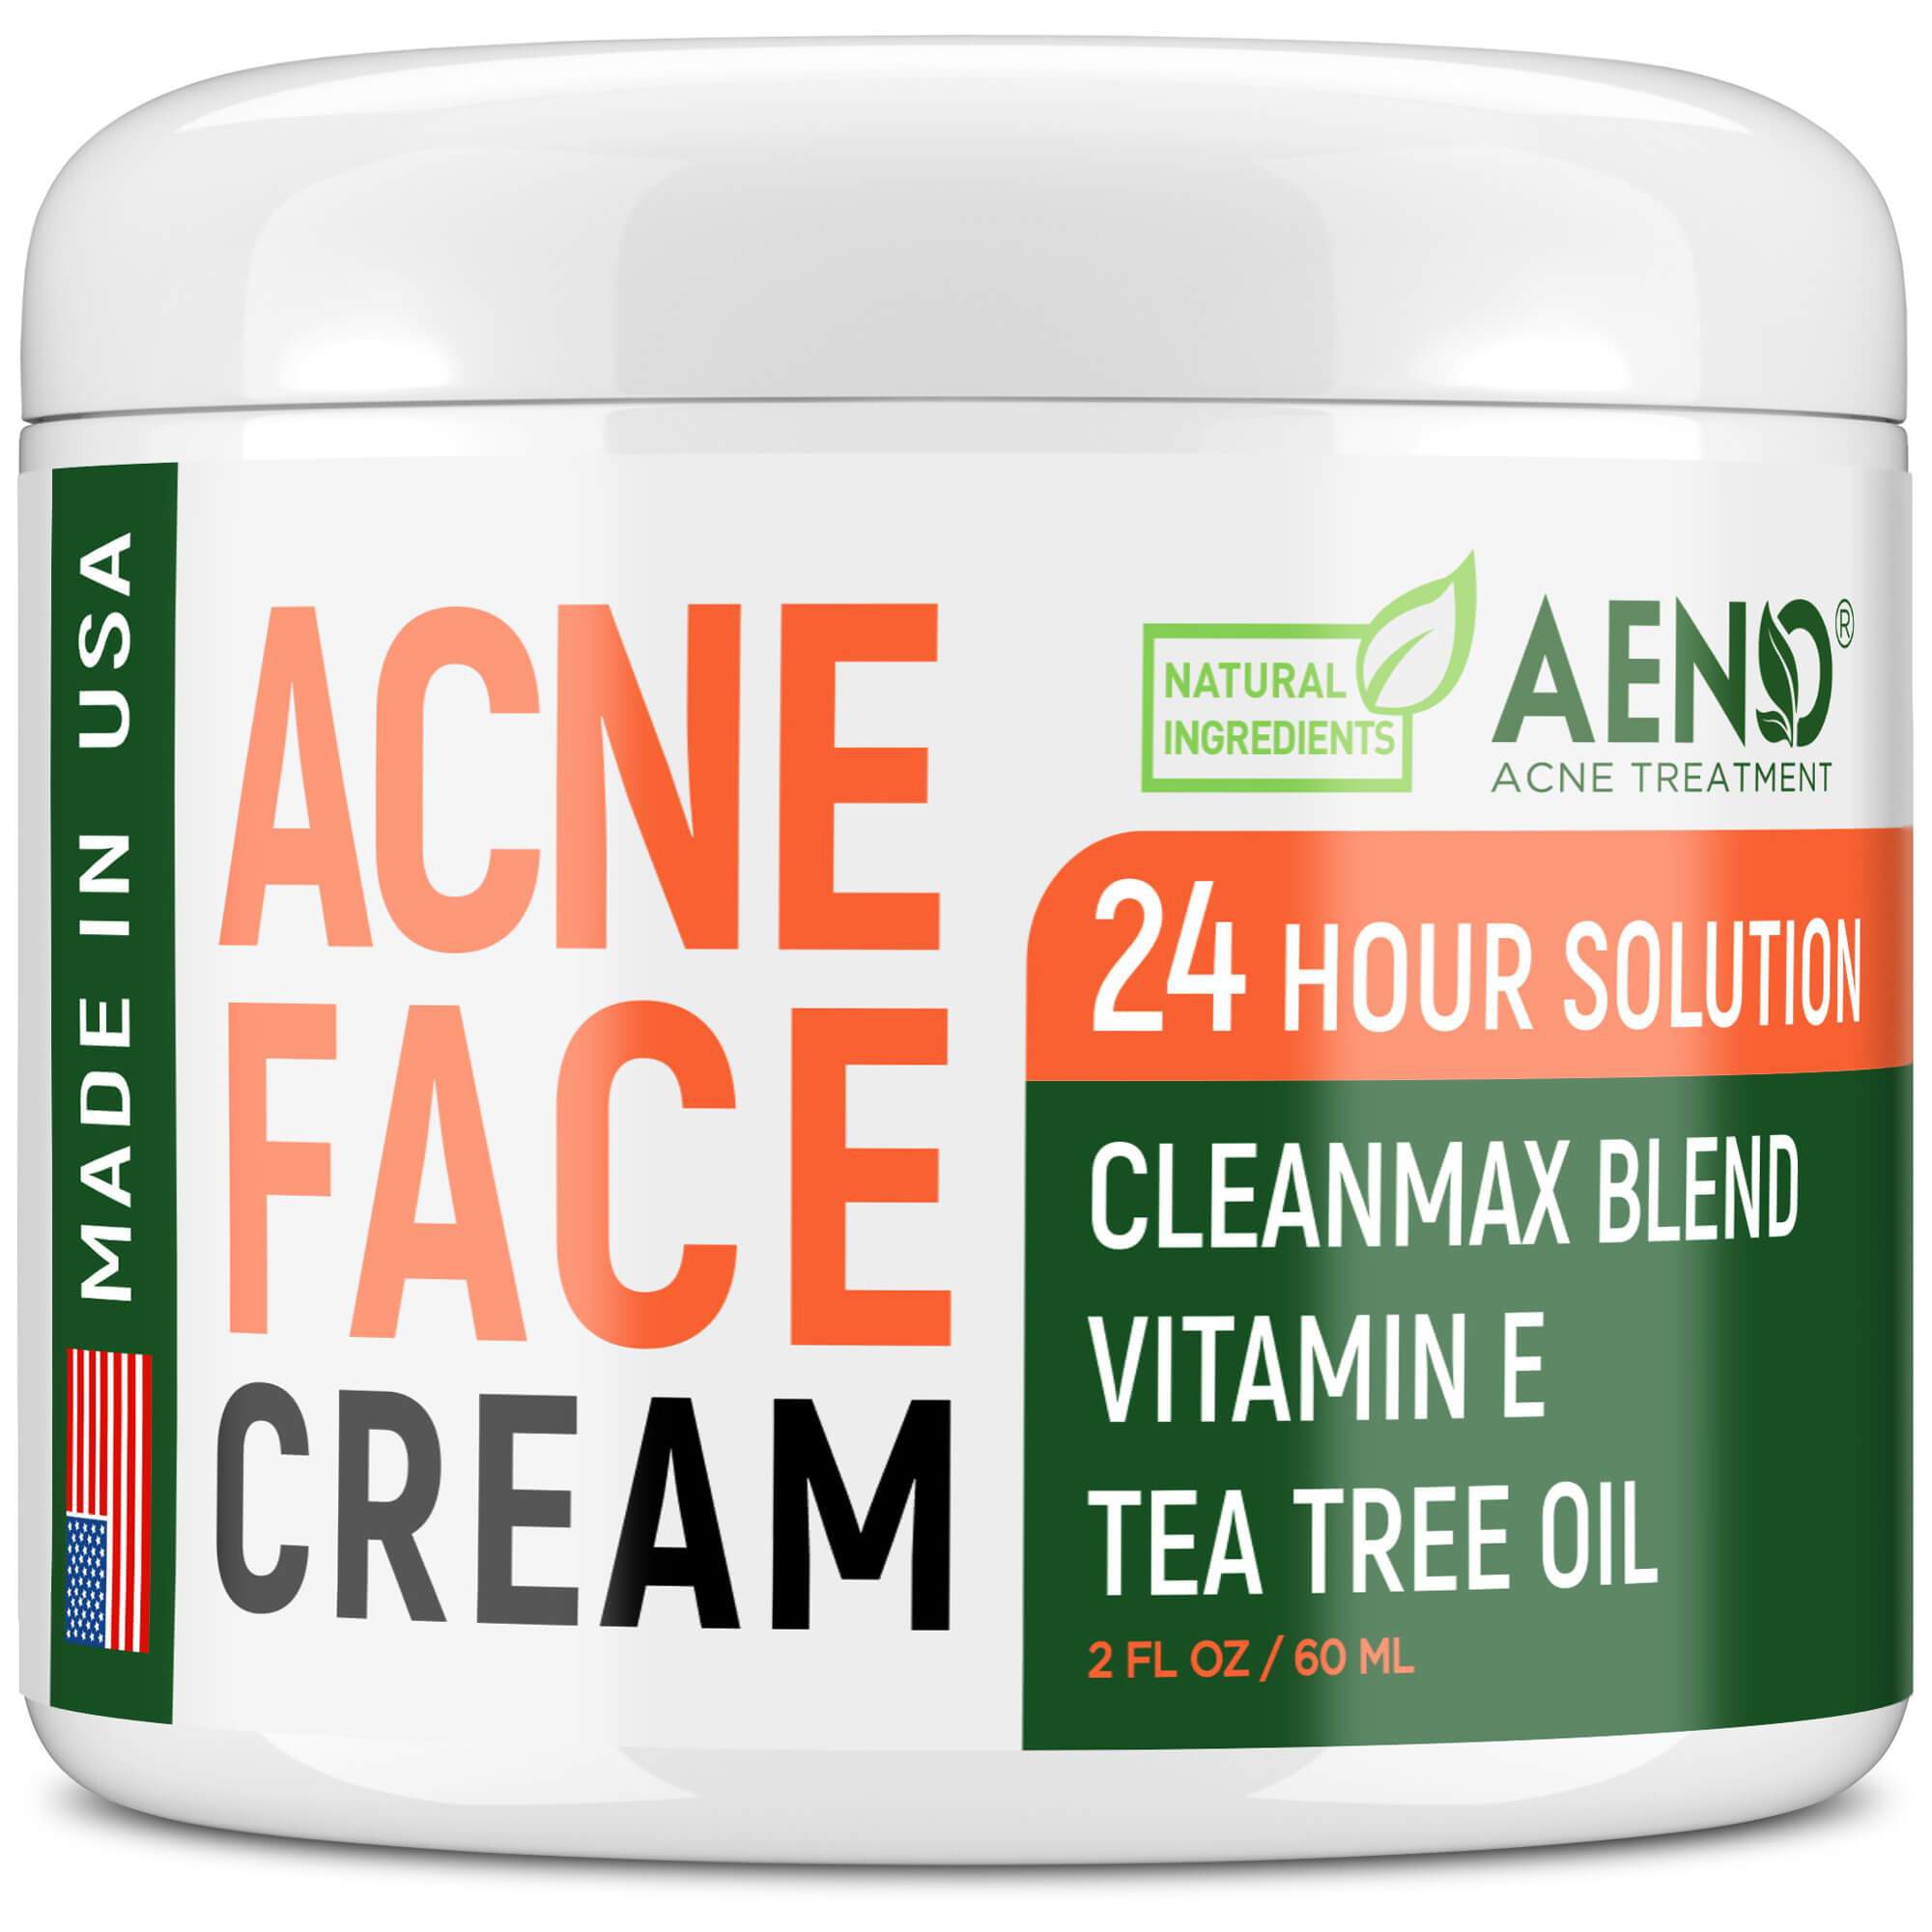 AENO Acne Treatment Natural Cream